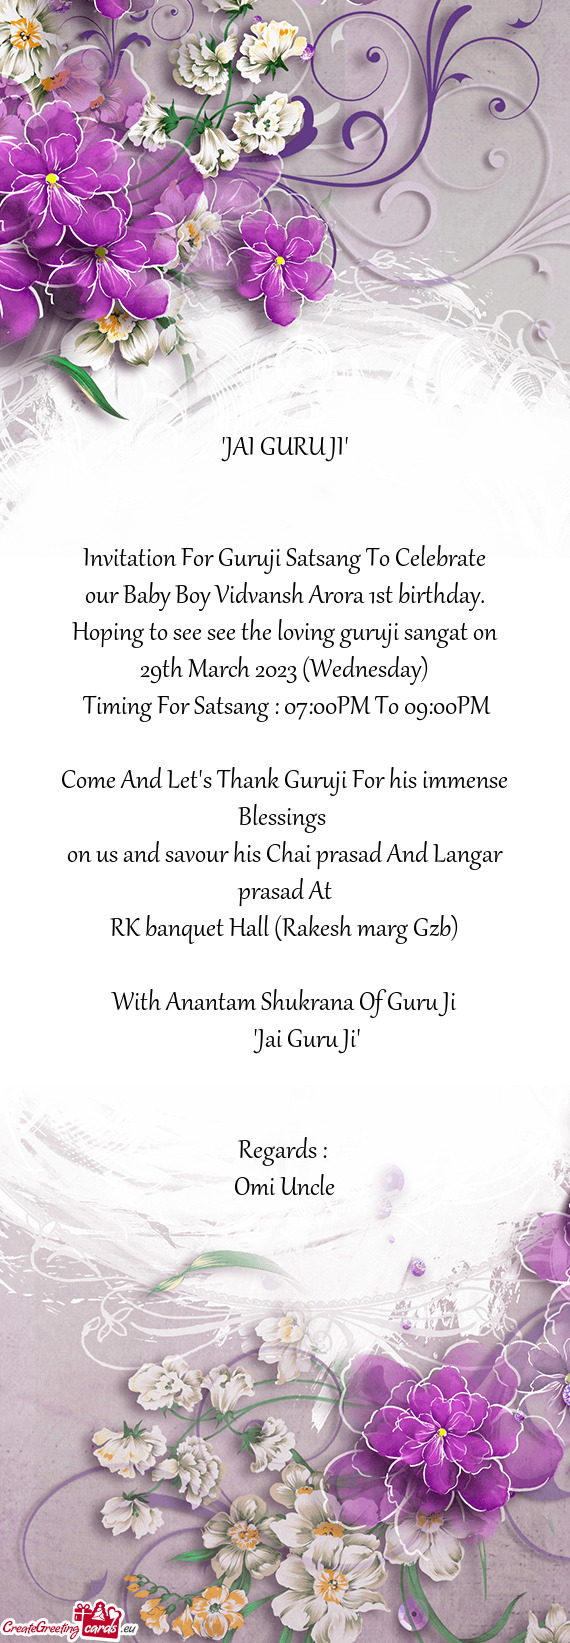 Invitation For Guruji Satsang To Celebrate